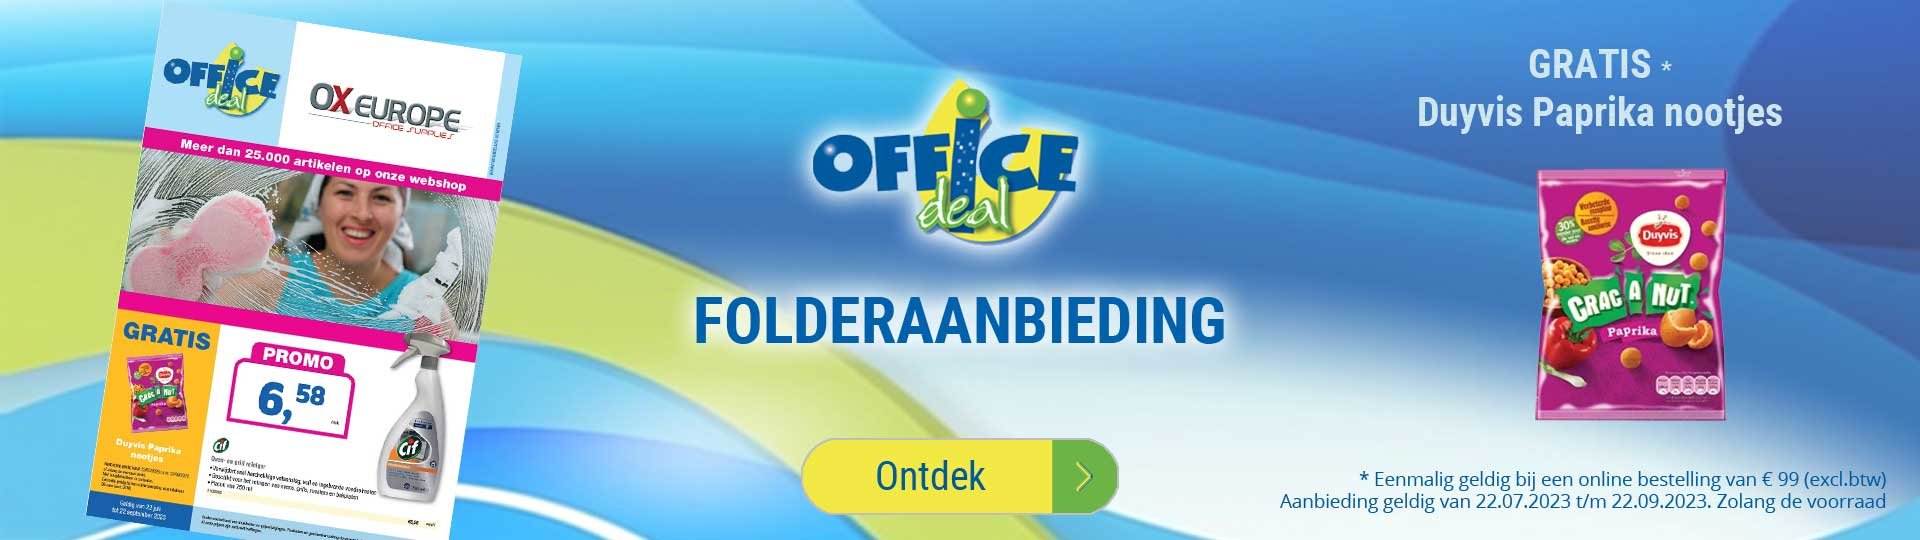 Office Deal folderaanbieding  kantoorartikelen | oxeurope.nl